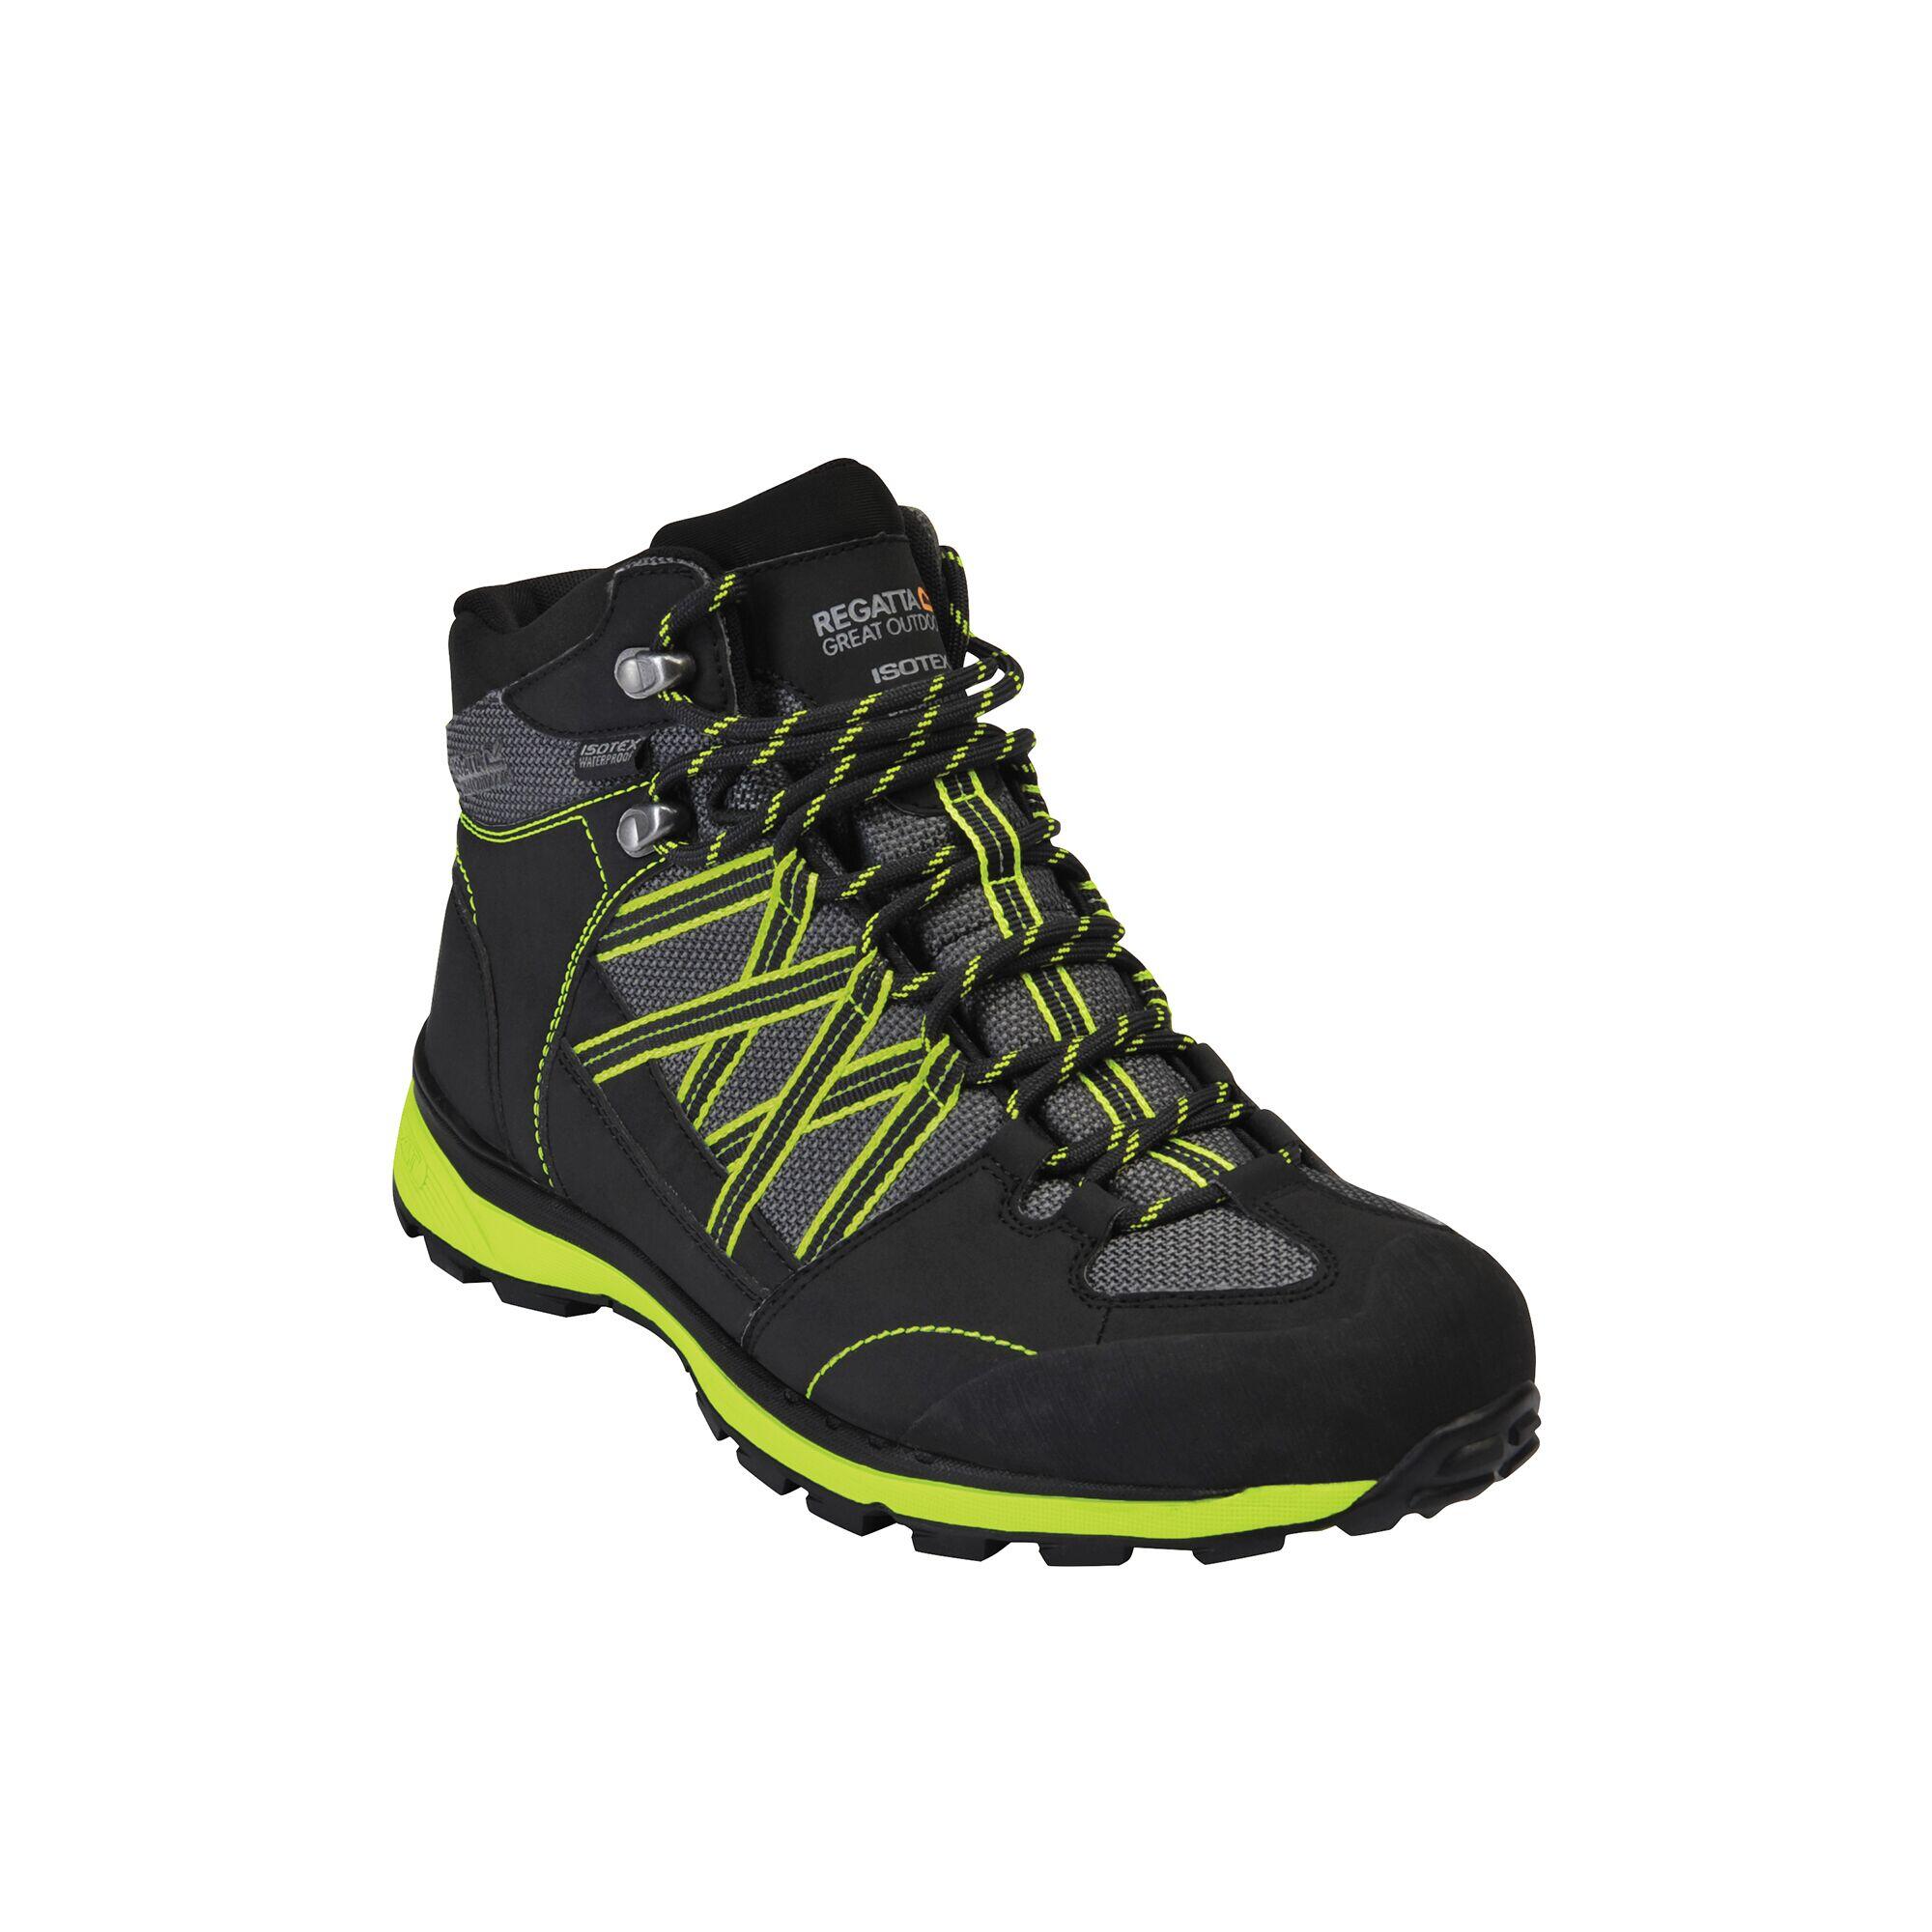 Samaris II Men's Hiking Boots - Black/Light Green 1/6